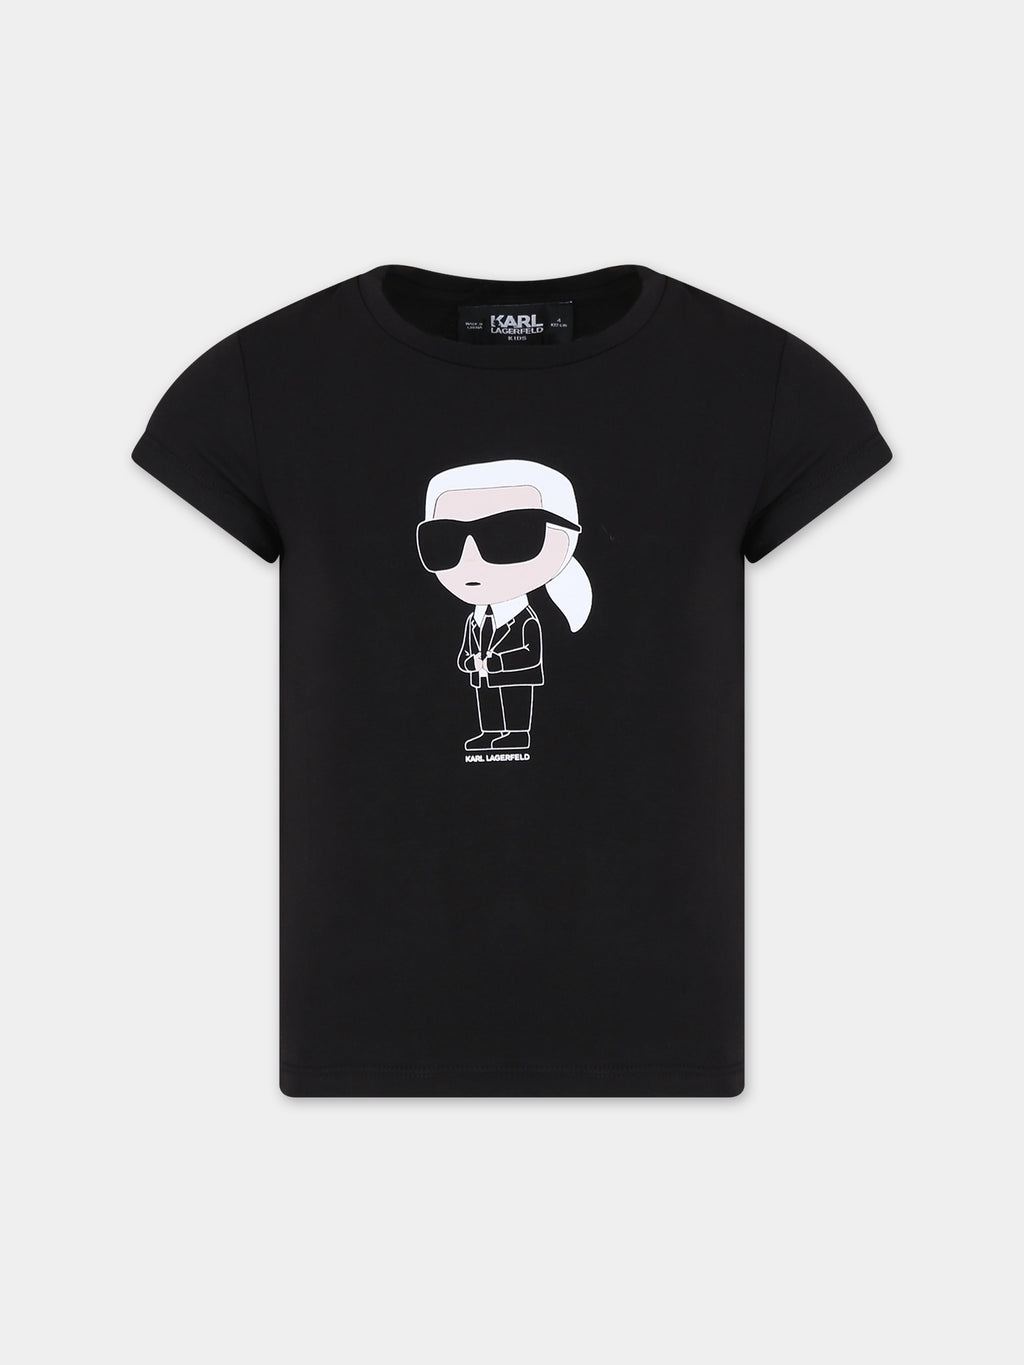 T-shirt nera per bambina con stampa Karl Lagerfeld e logo